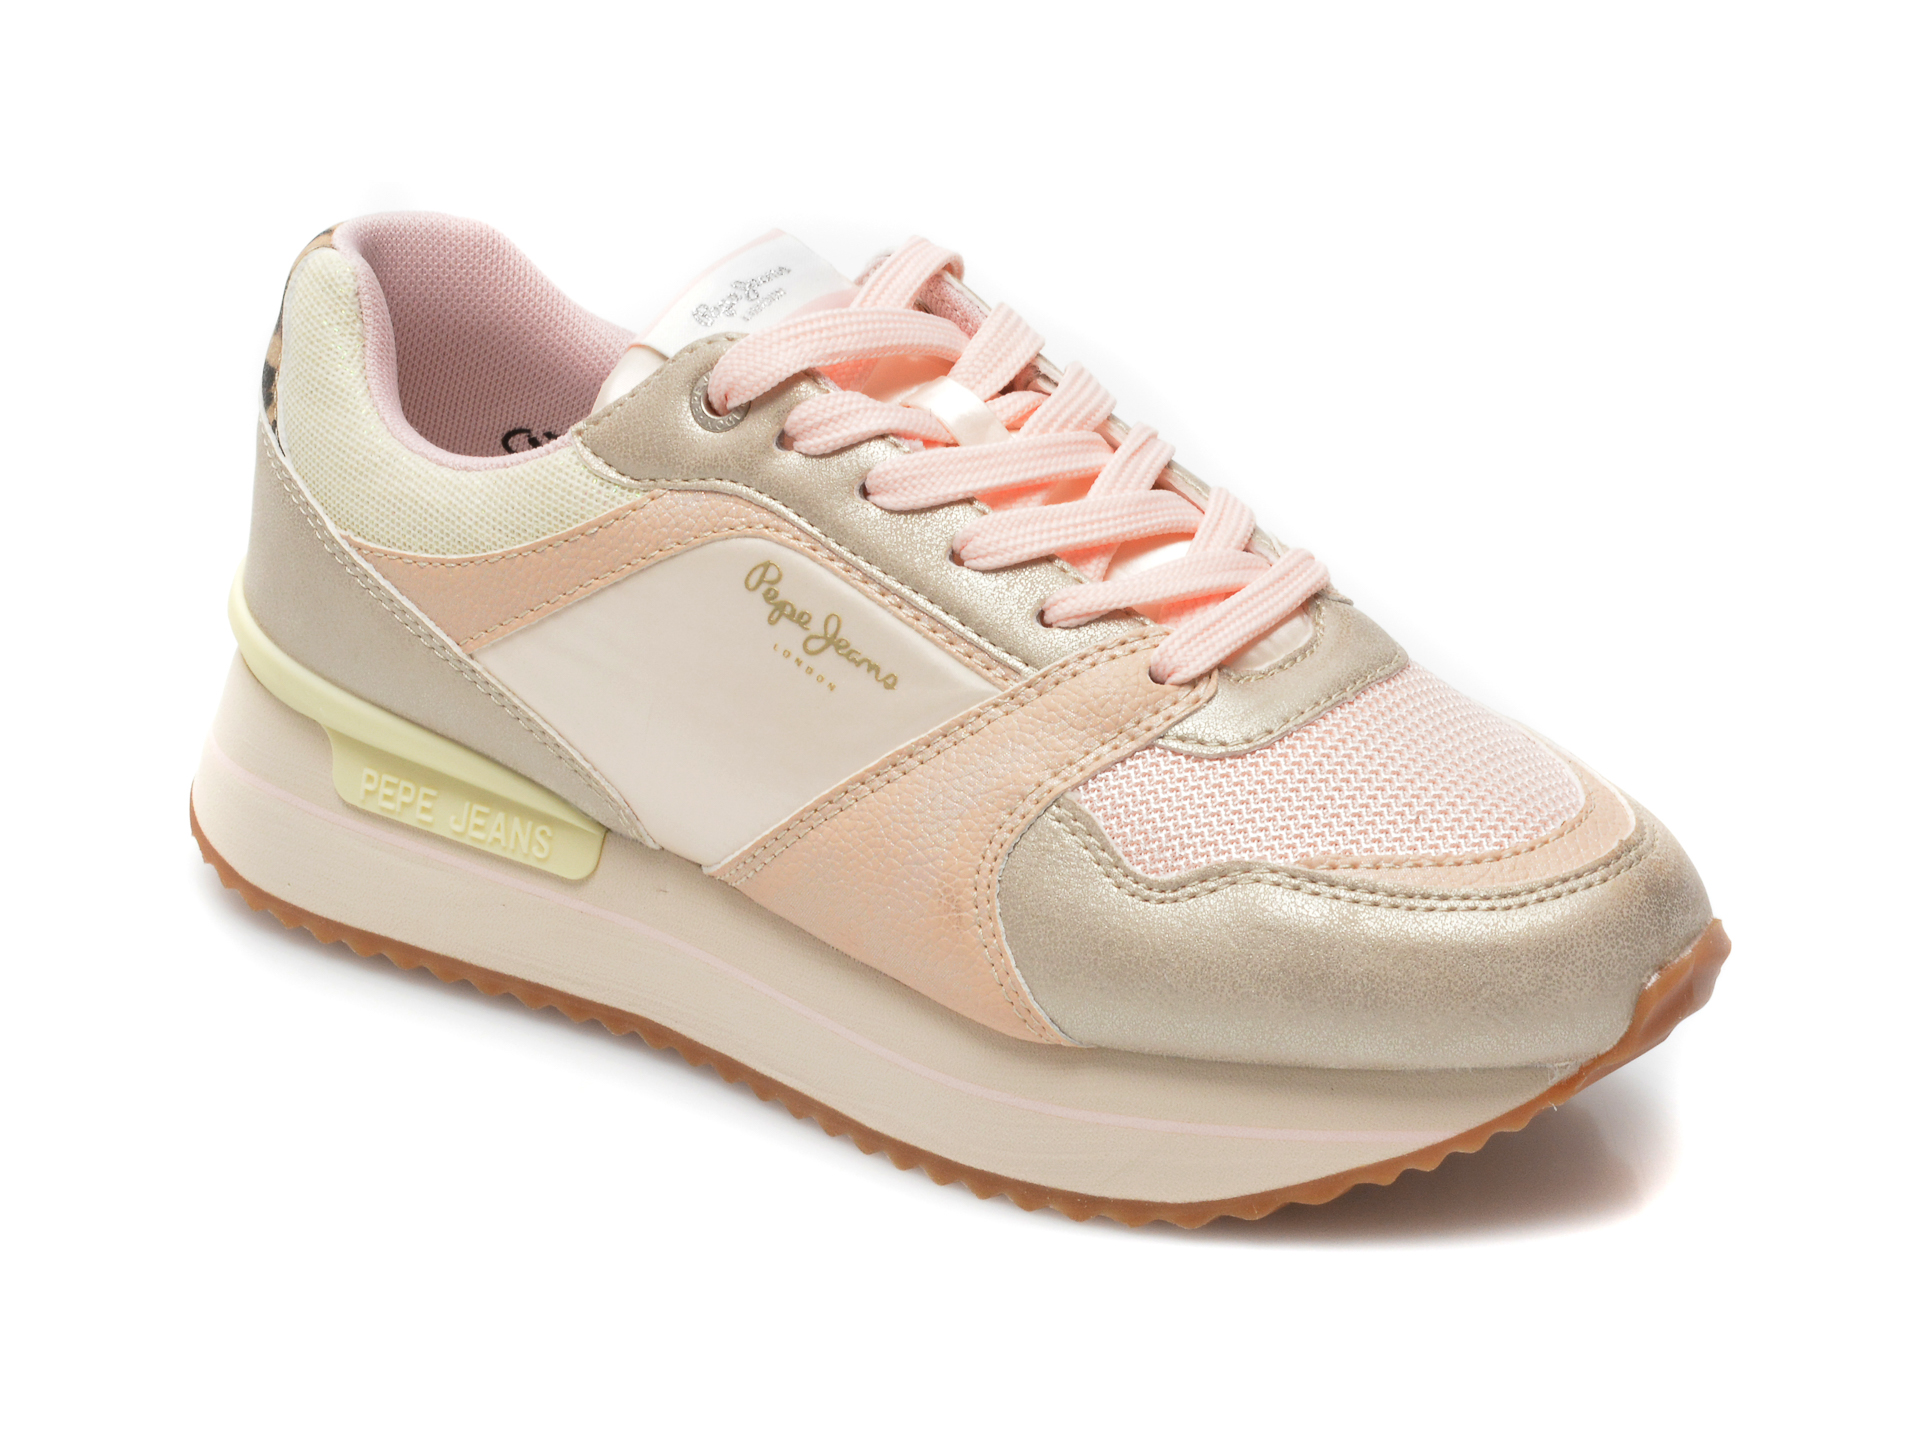 Pantofi sport PEPE JEANS roz, 3118999, din material textil si piele naturala